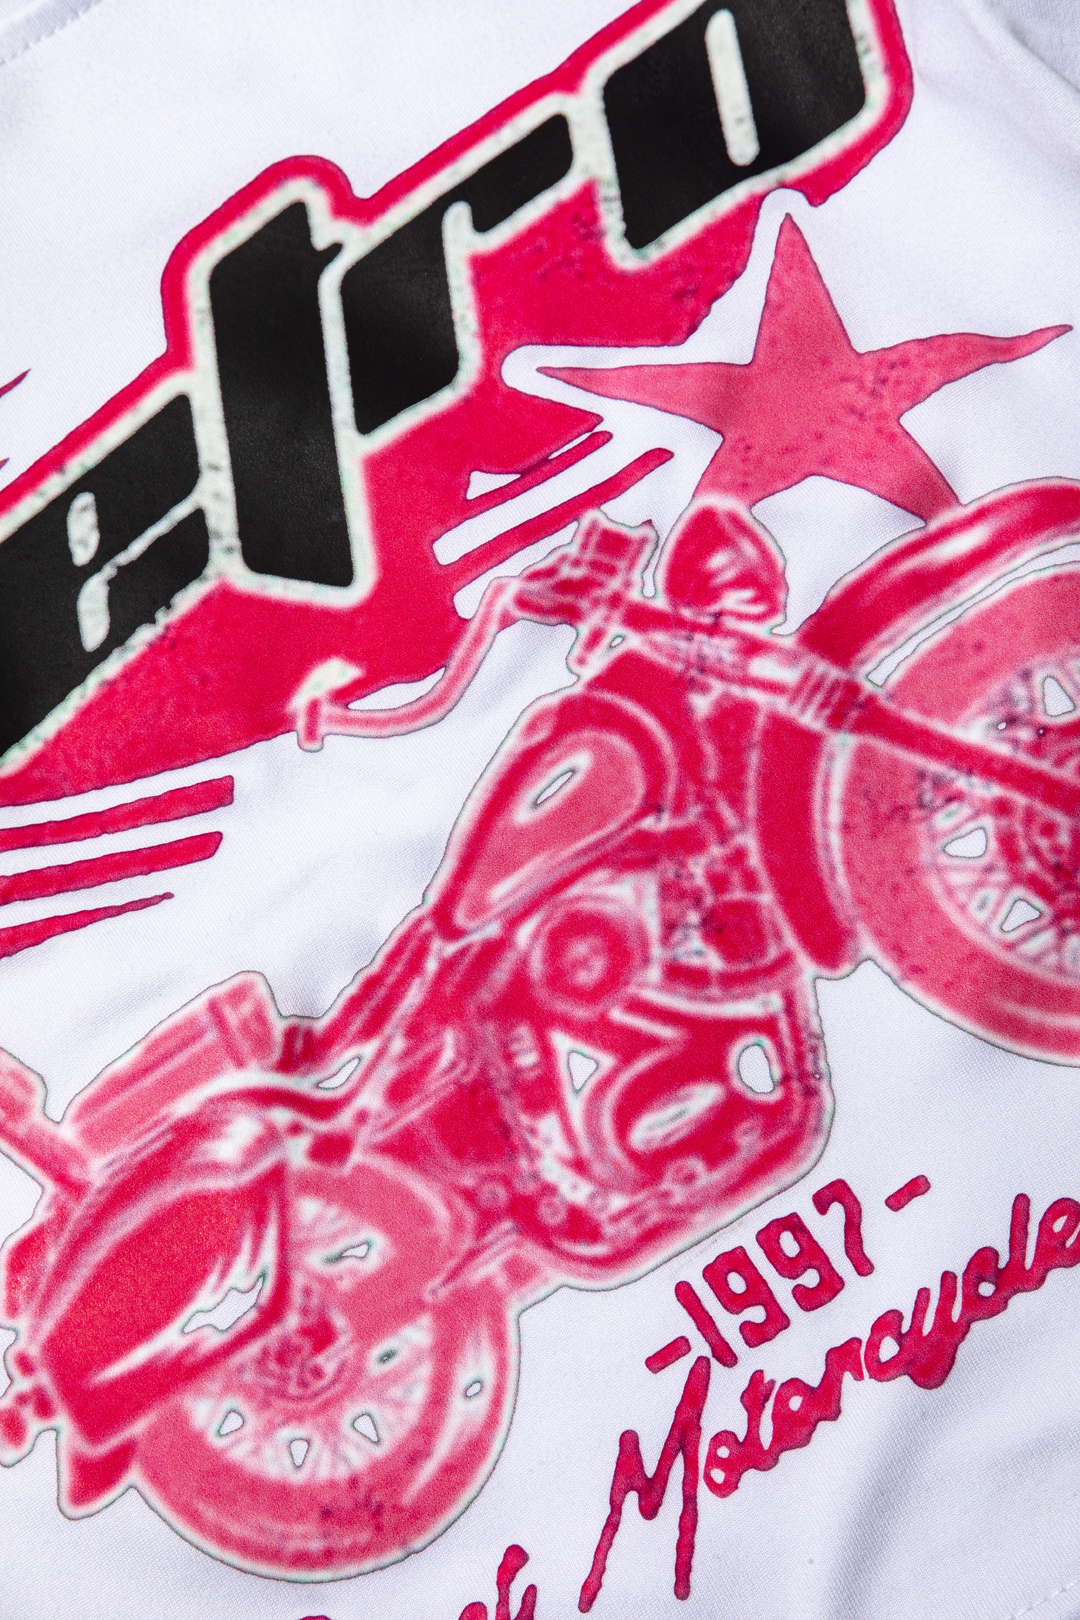 Motorcycle Print T-shirt